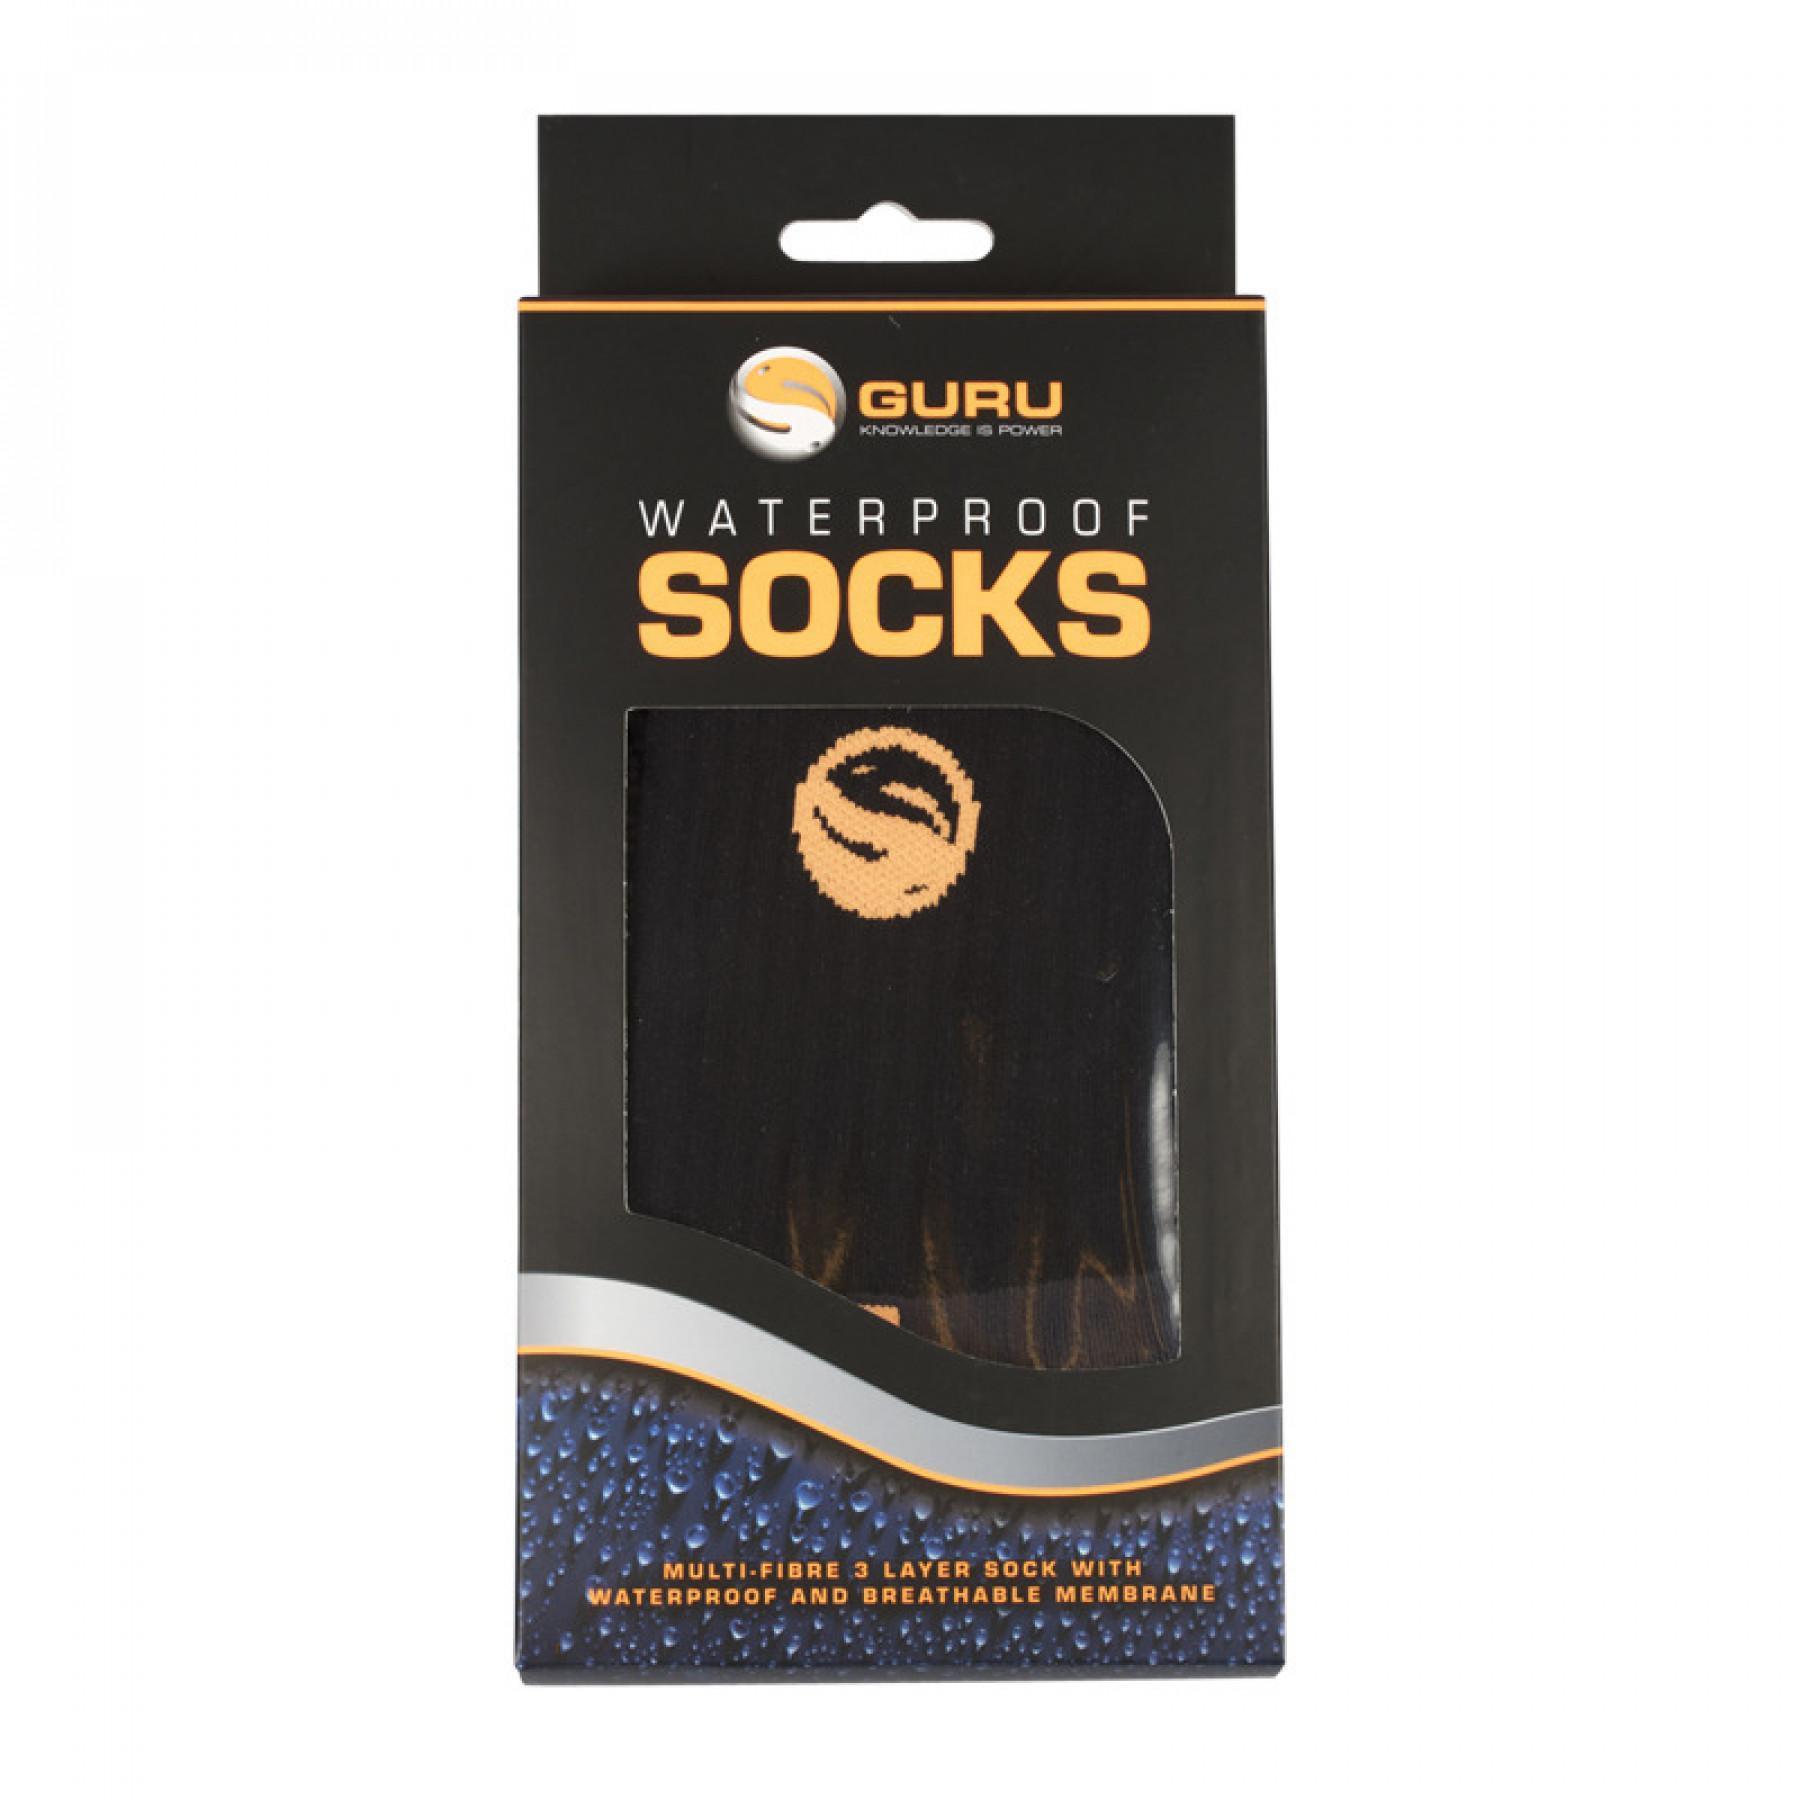 Calzini Guru Waterproof Socks